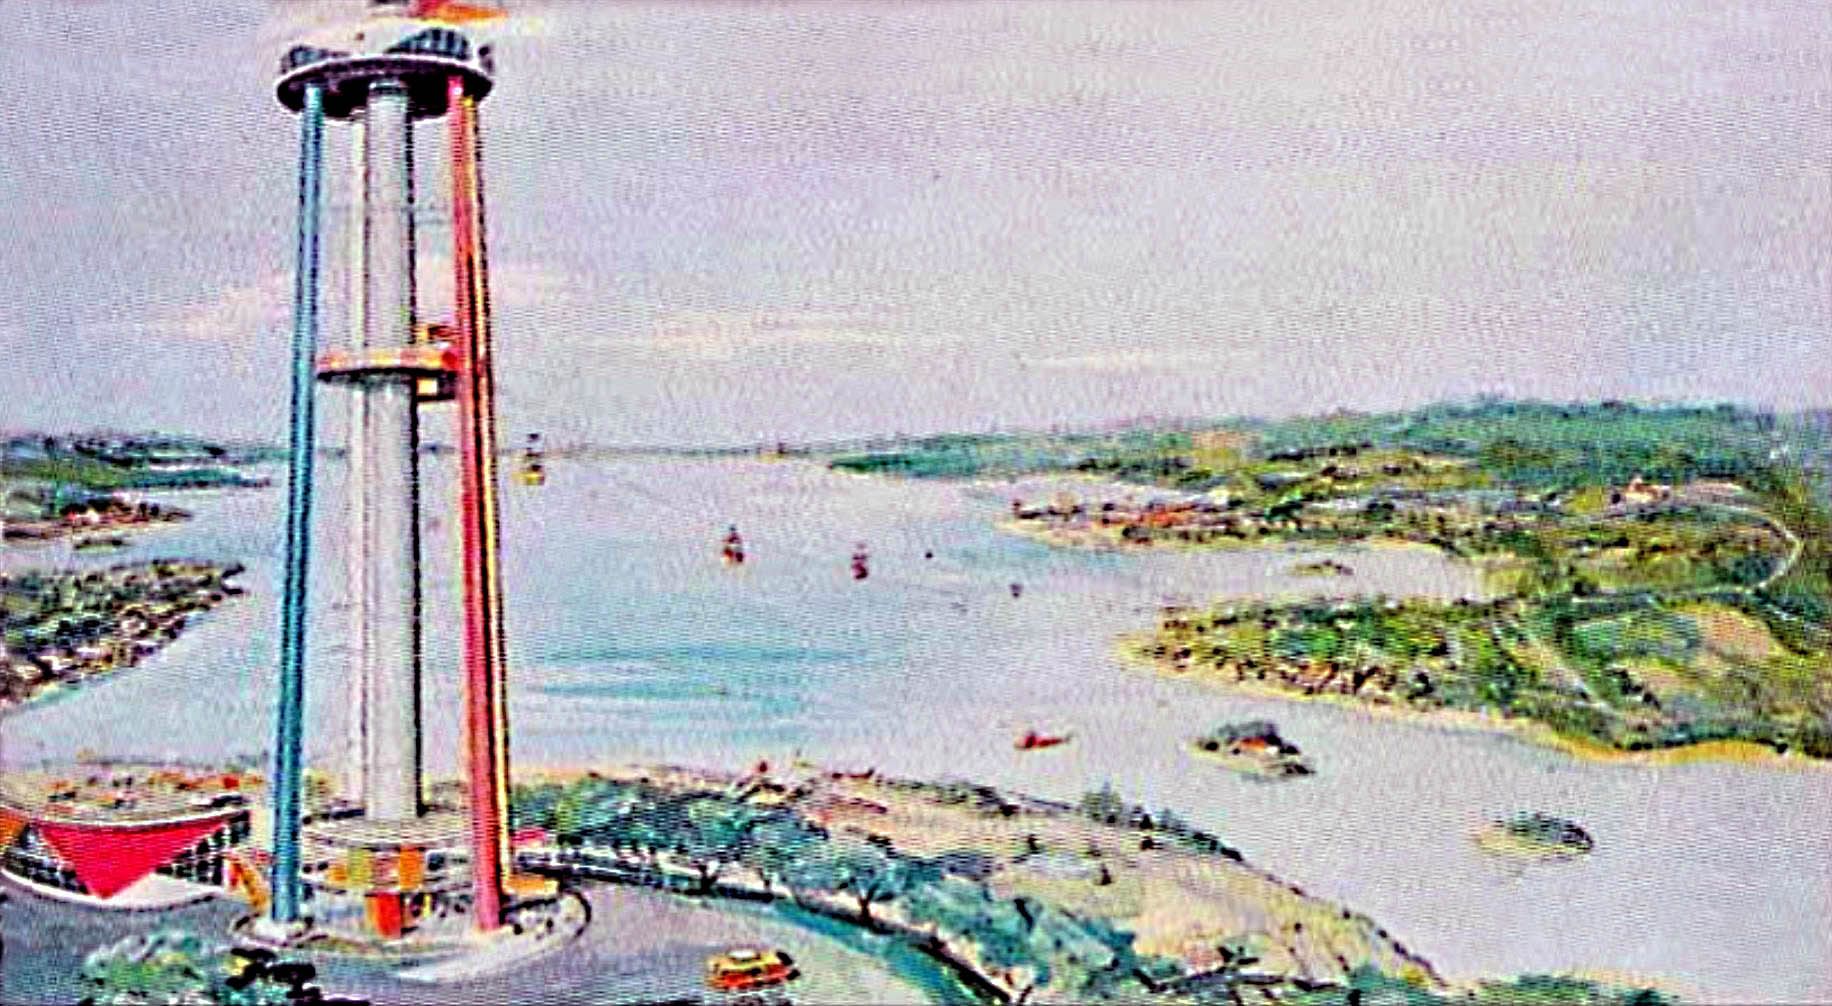 A promotional poster of Lakeland Amusement Park